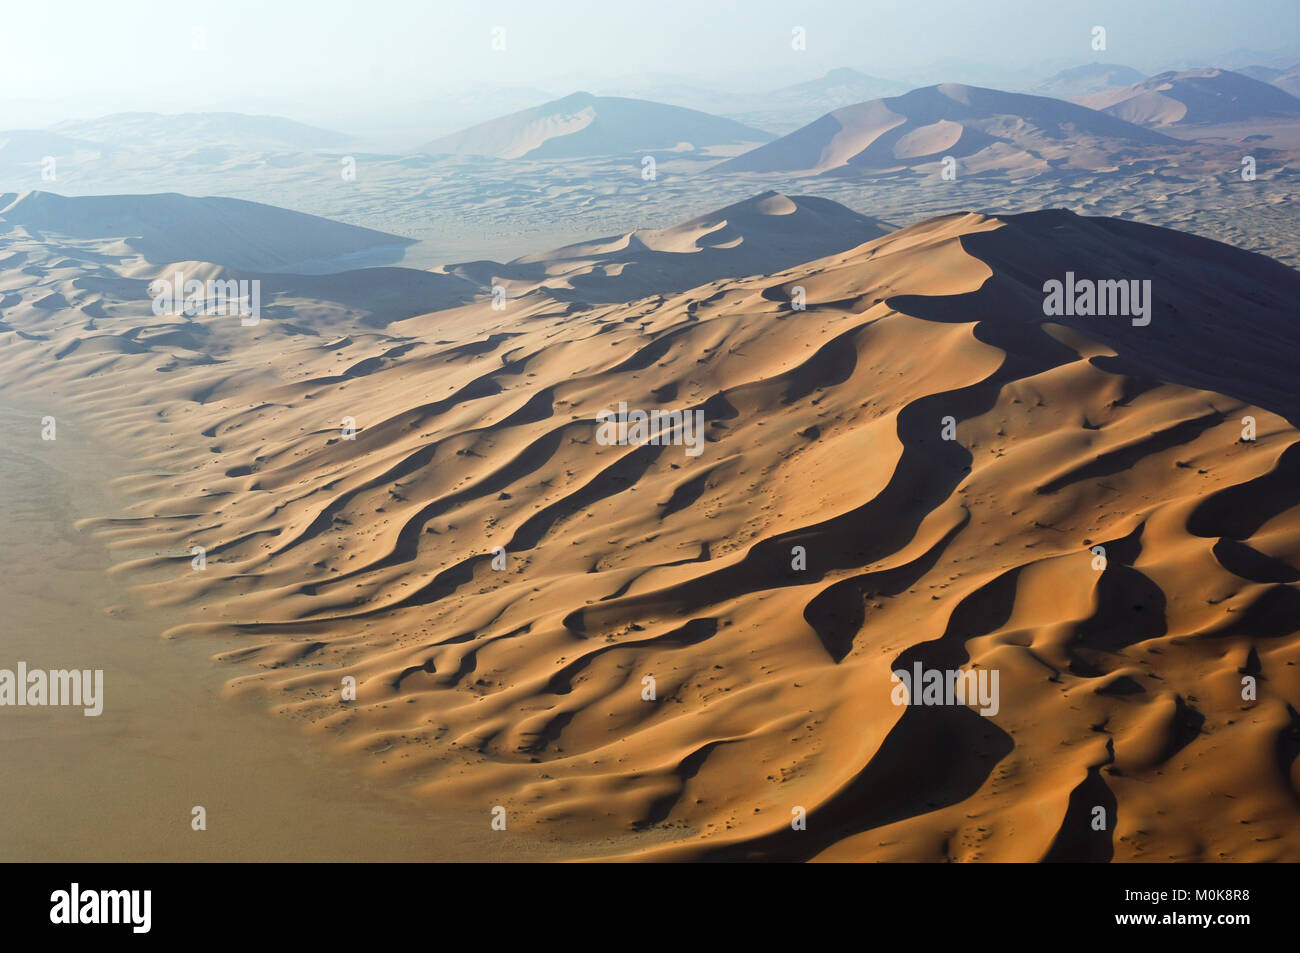 Aerial View Of Sand Dunes At Rub Al Khali Desert Stock Photo Alamy